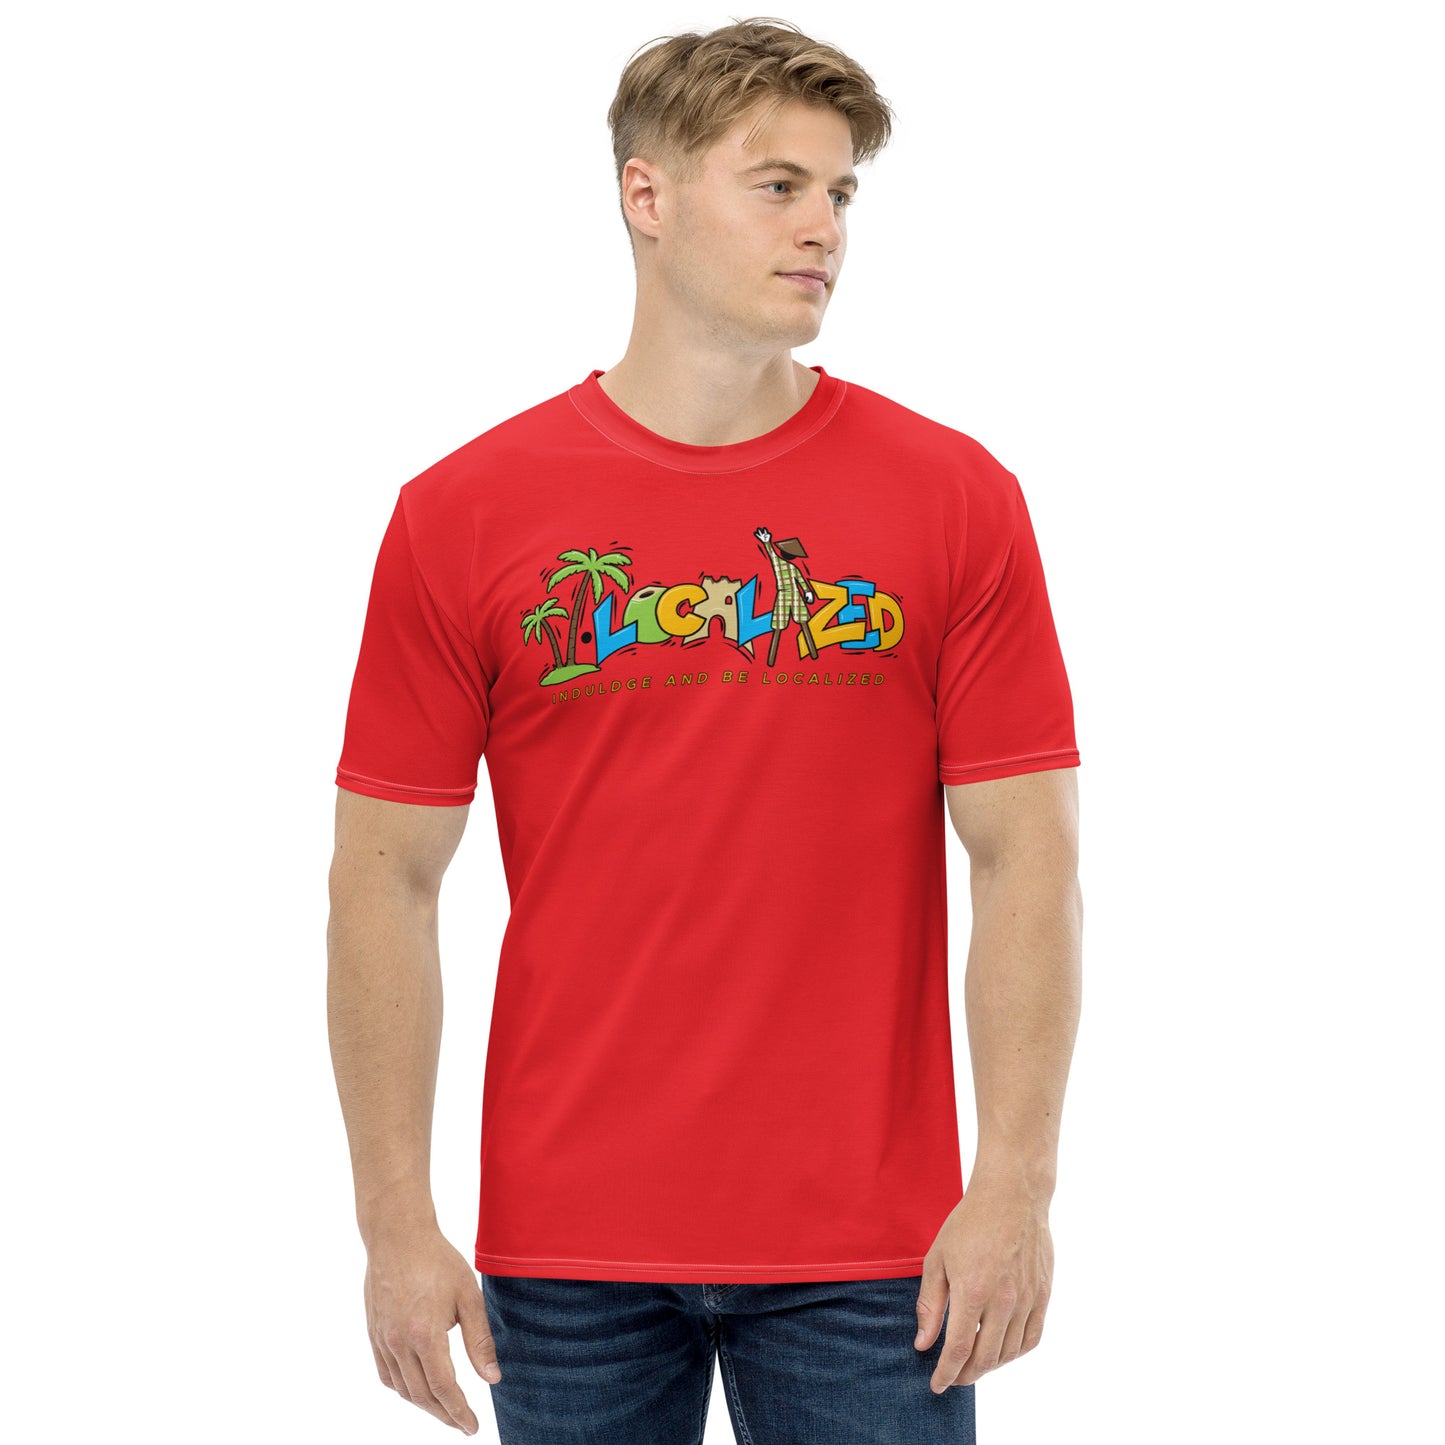 Red V.Localized (Regular) Men’s Dry-Fit T-Shirt